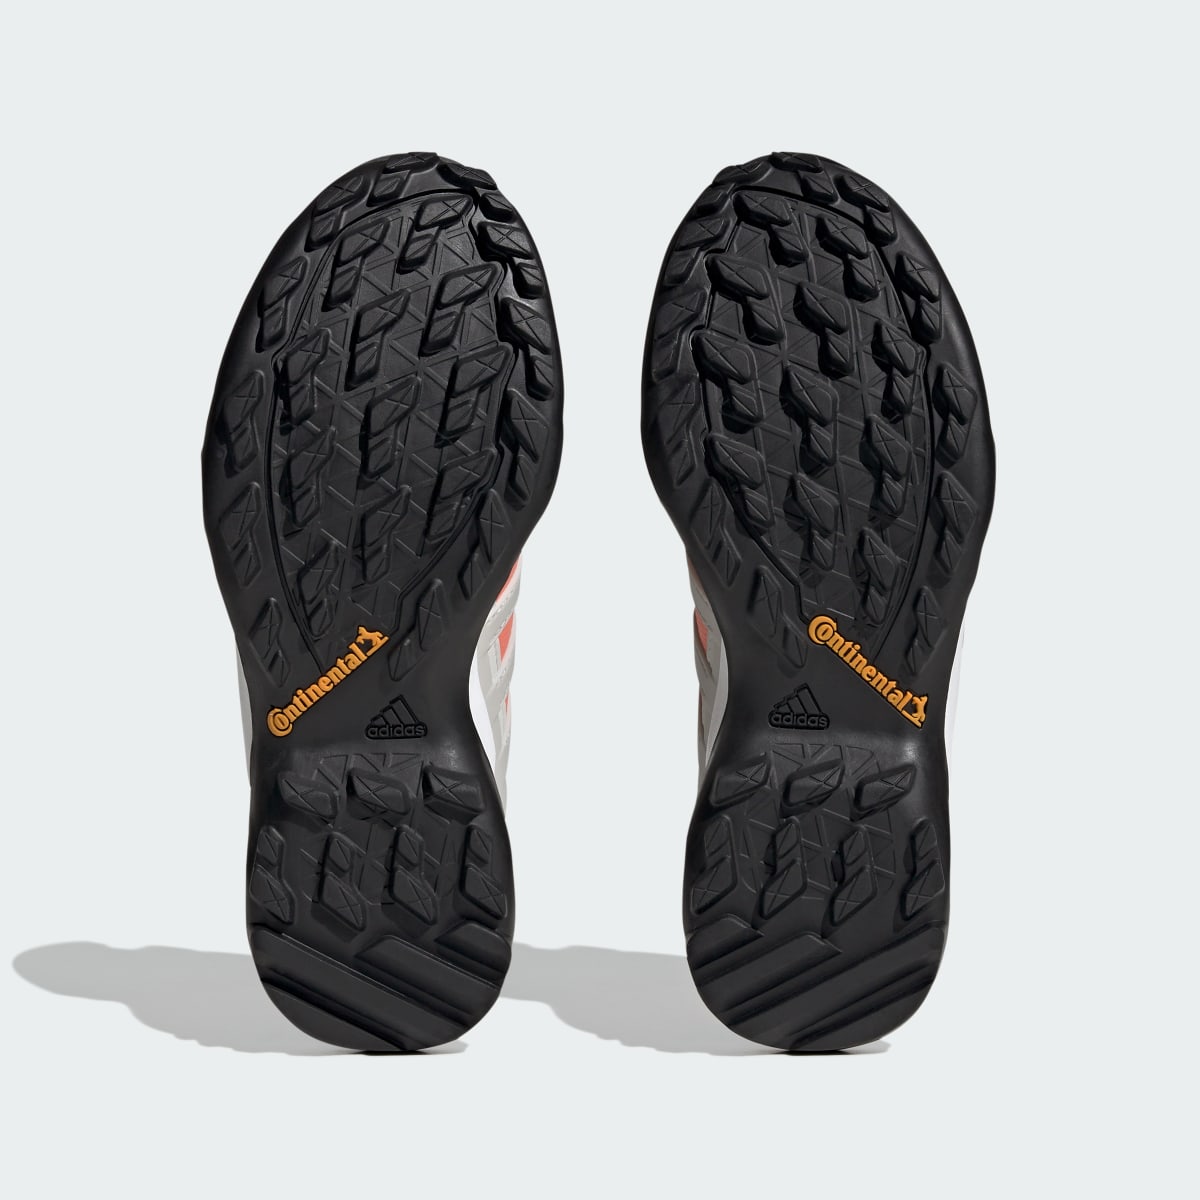 Adidas Terrex Swift R2 GORE-TEX Hiking Shoes. 5